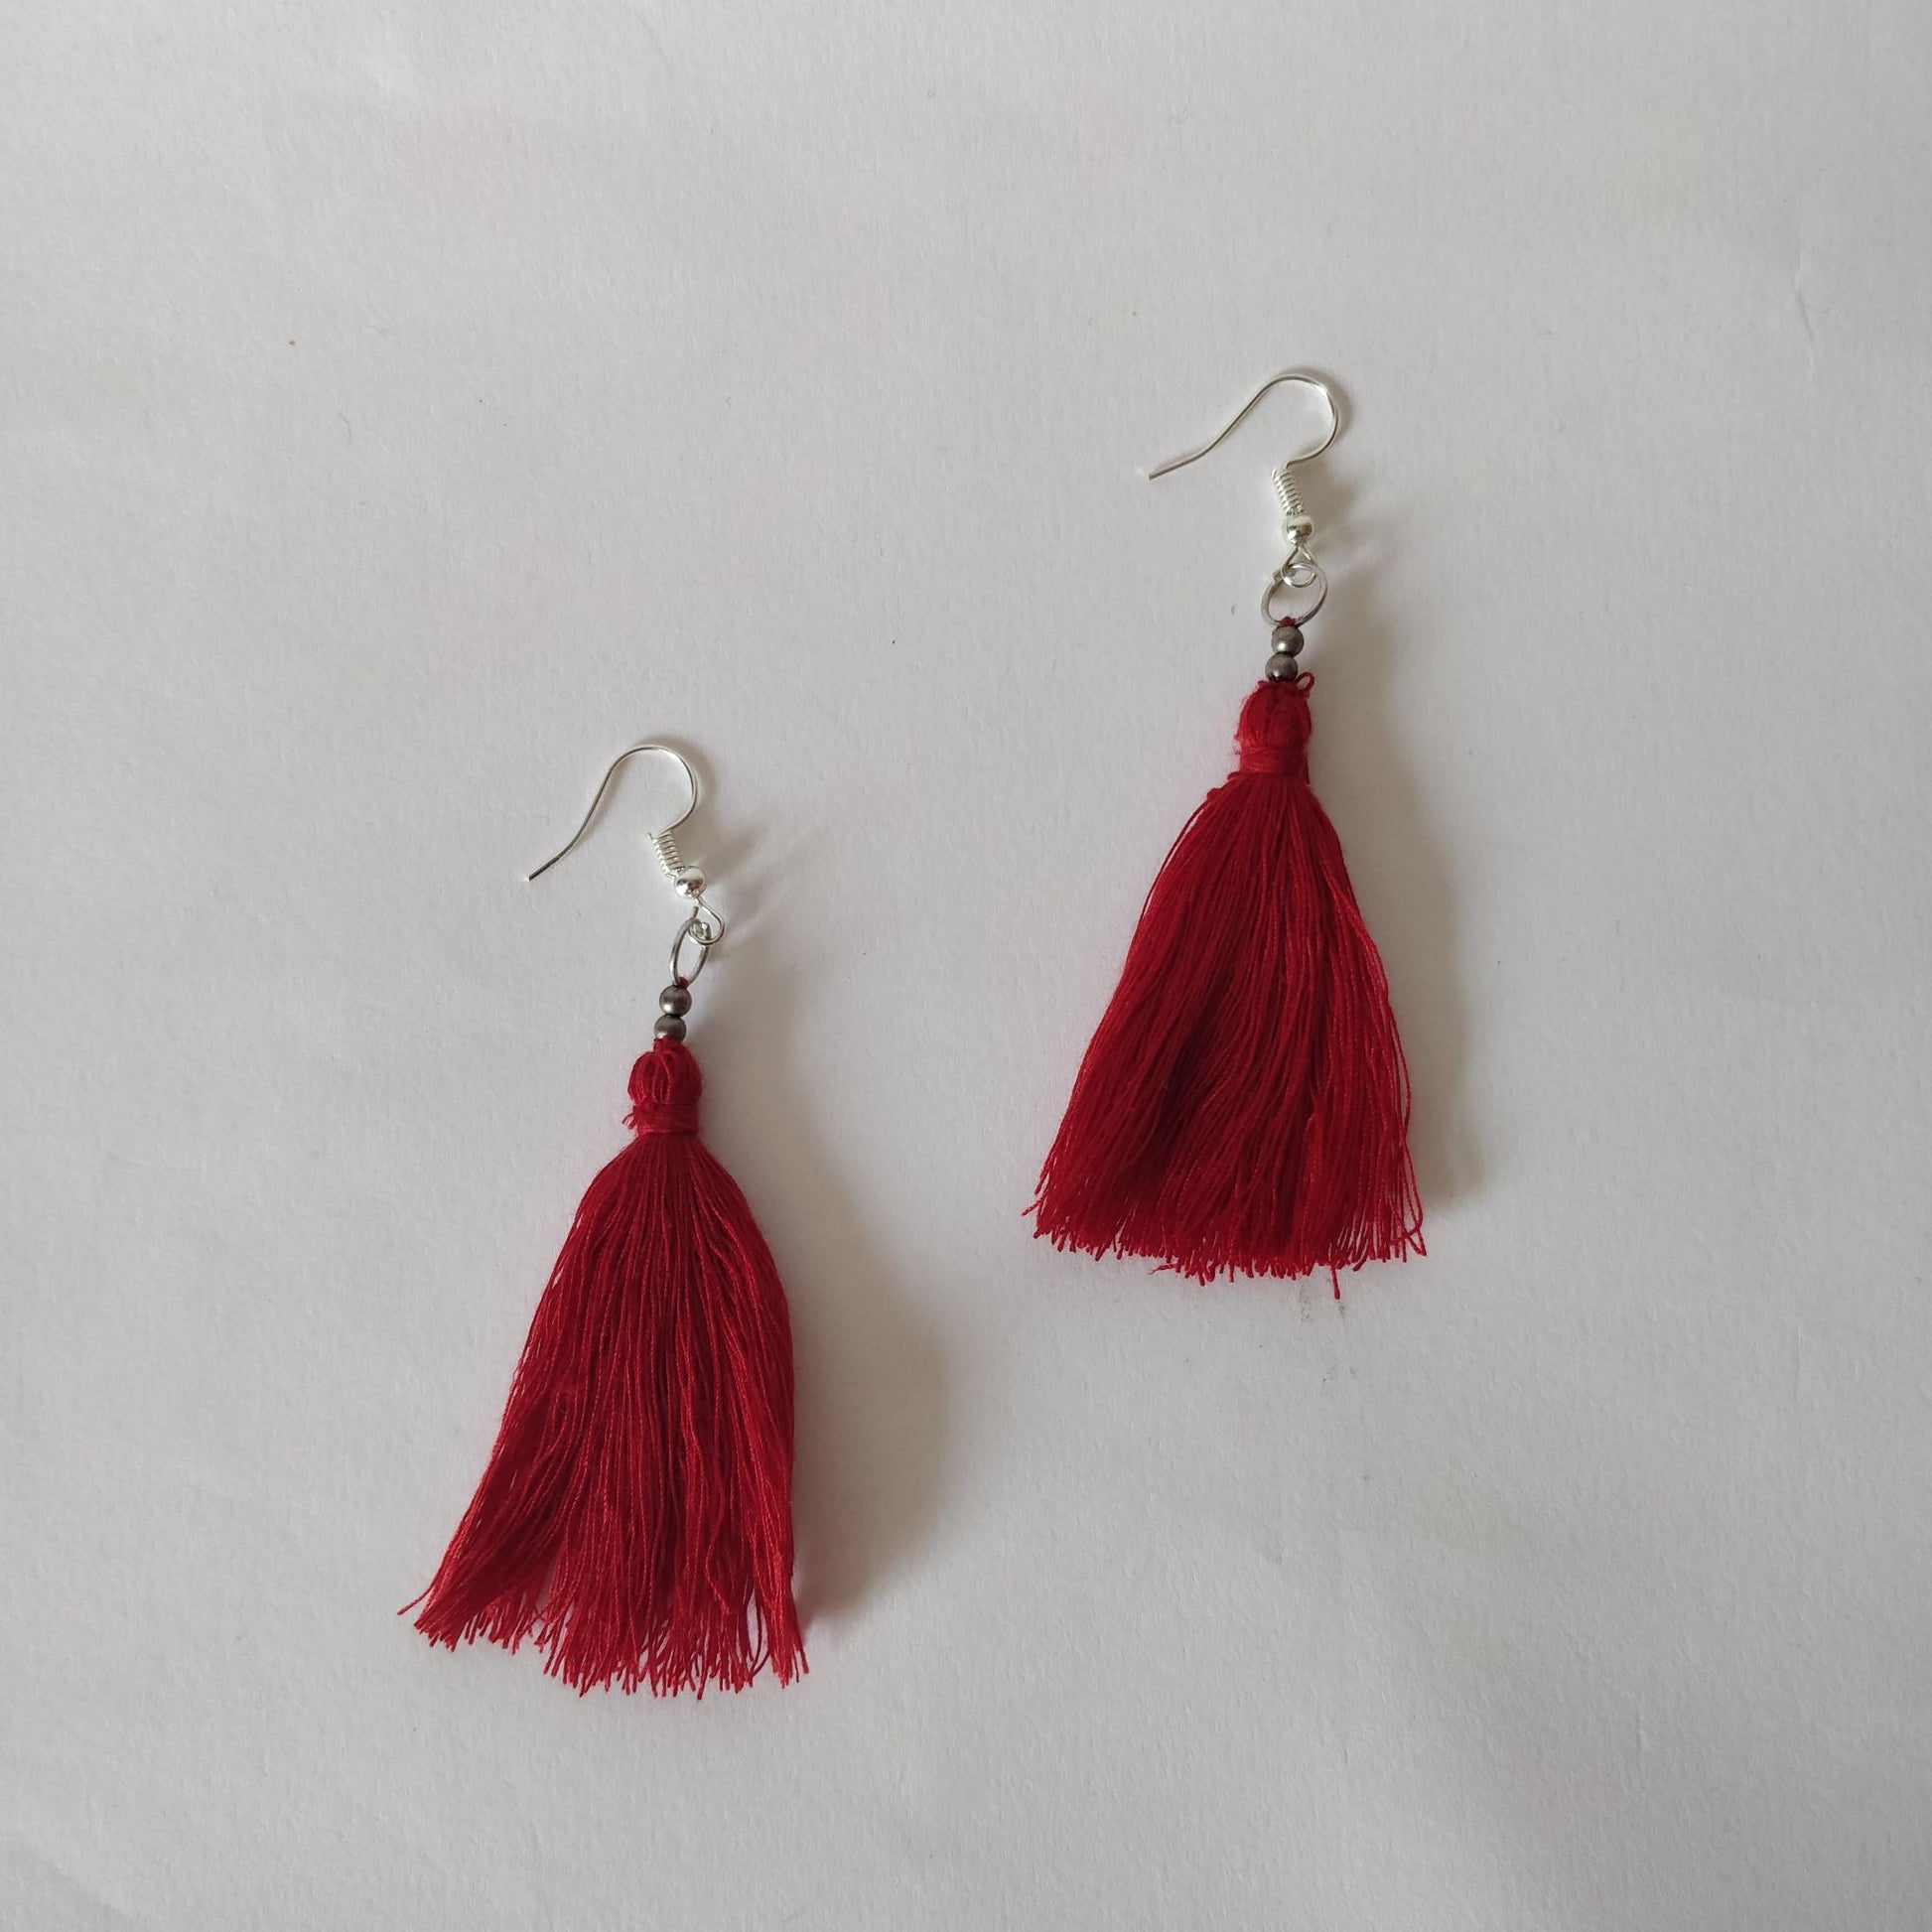 Empowering Tassel Earrings - red - handmade earrings